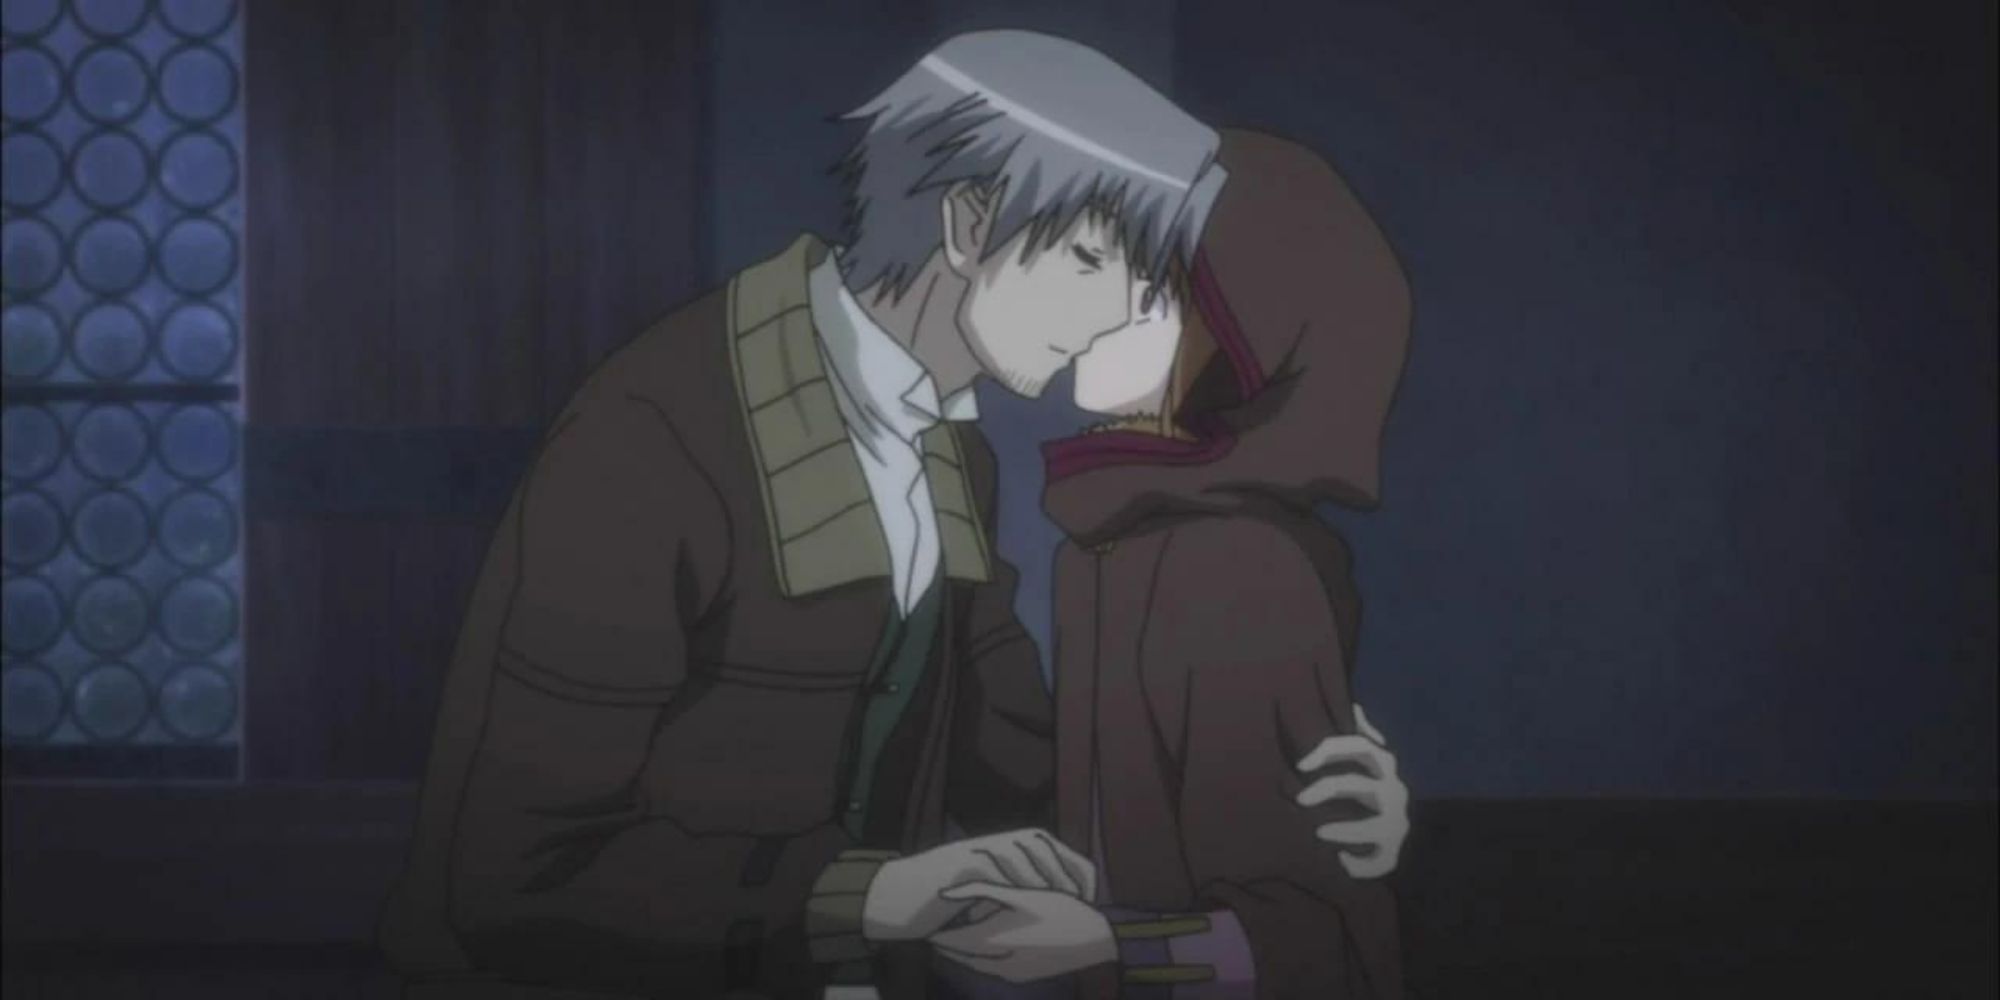 Anime lesbian kiss | Romance Anime Amino